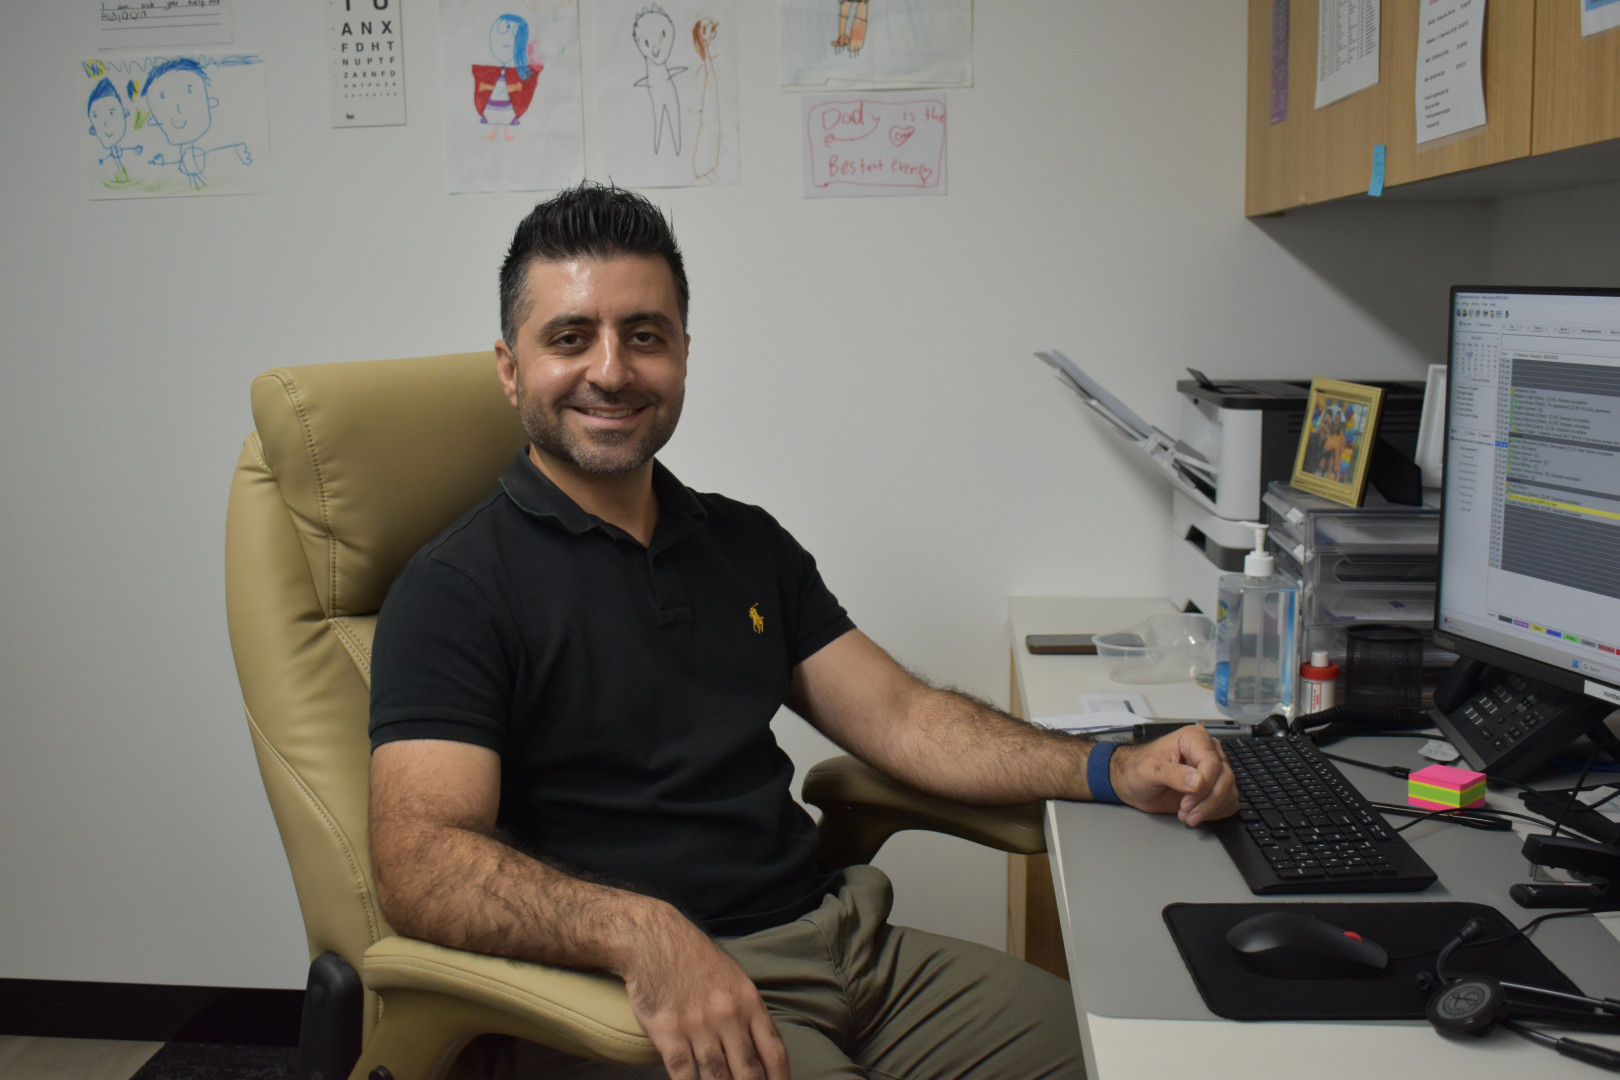 Dr Payim Faraid sitting at his desk at Terry Street Medical.